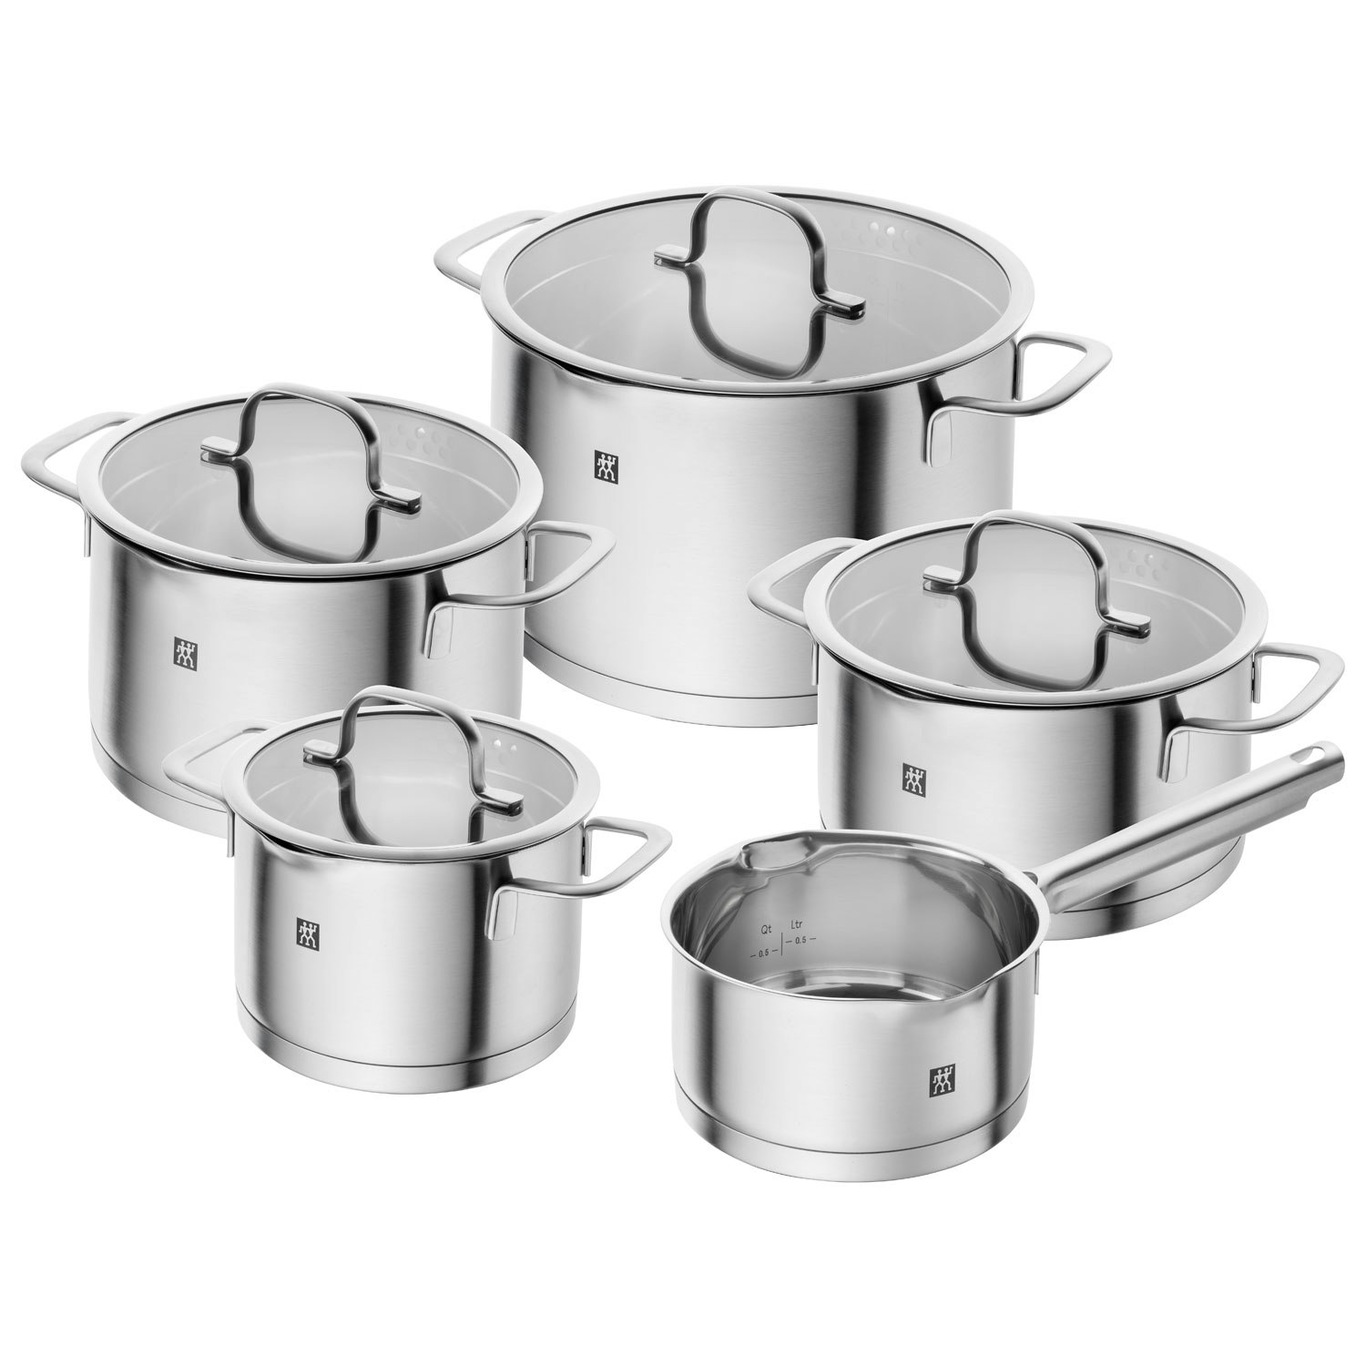 https://royaldesign.com/image/2/zwilling-true-flow-pot-set-5-pieces-0?w=800&quality=80